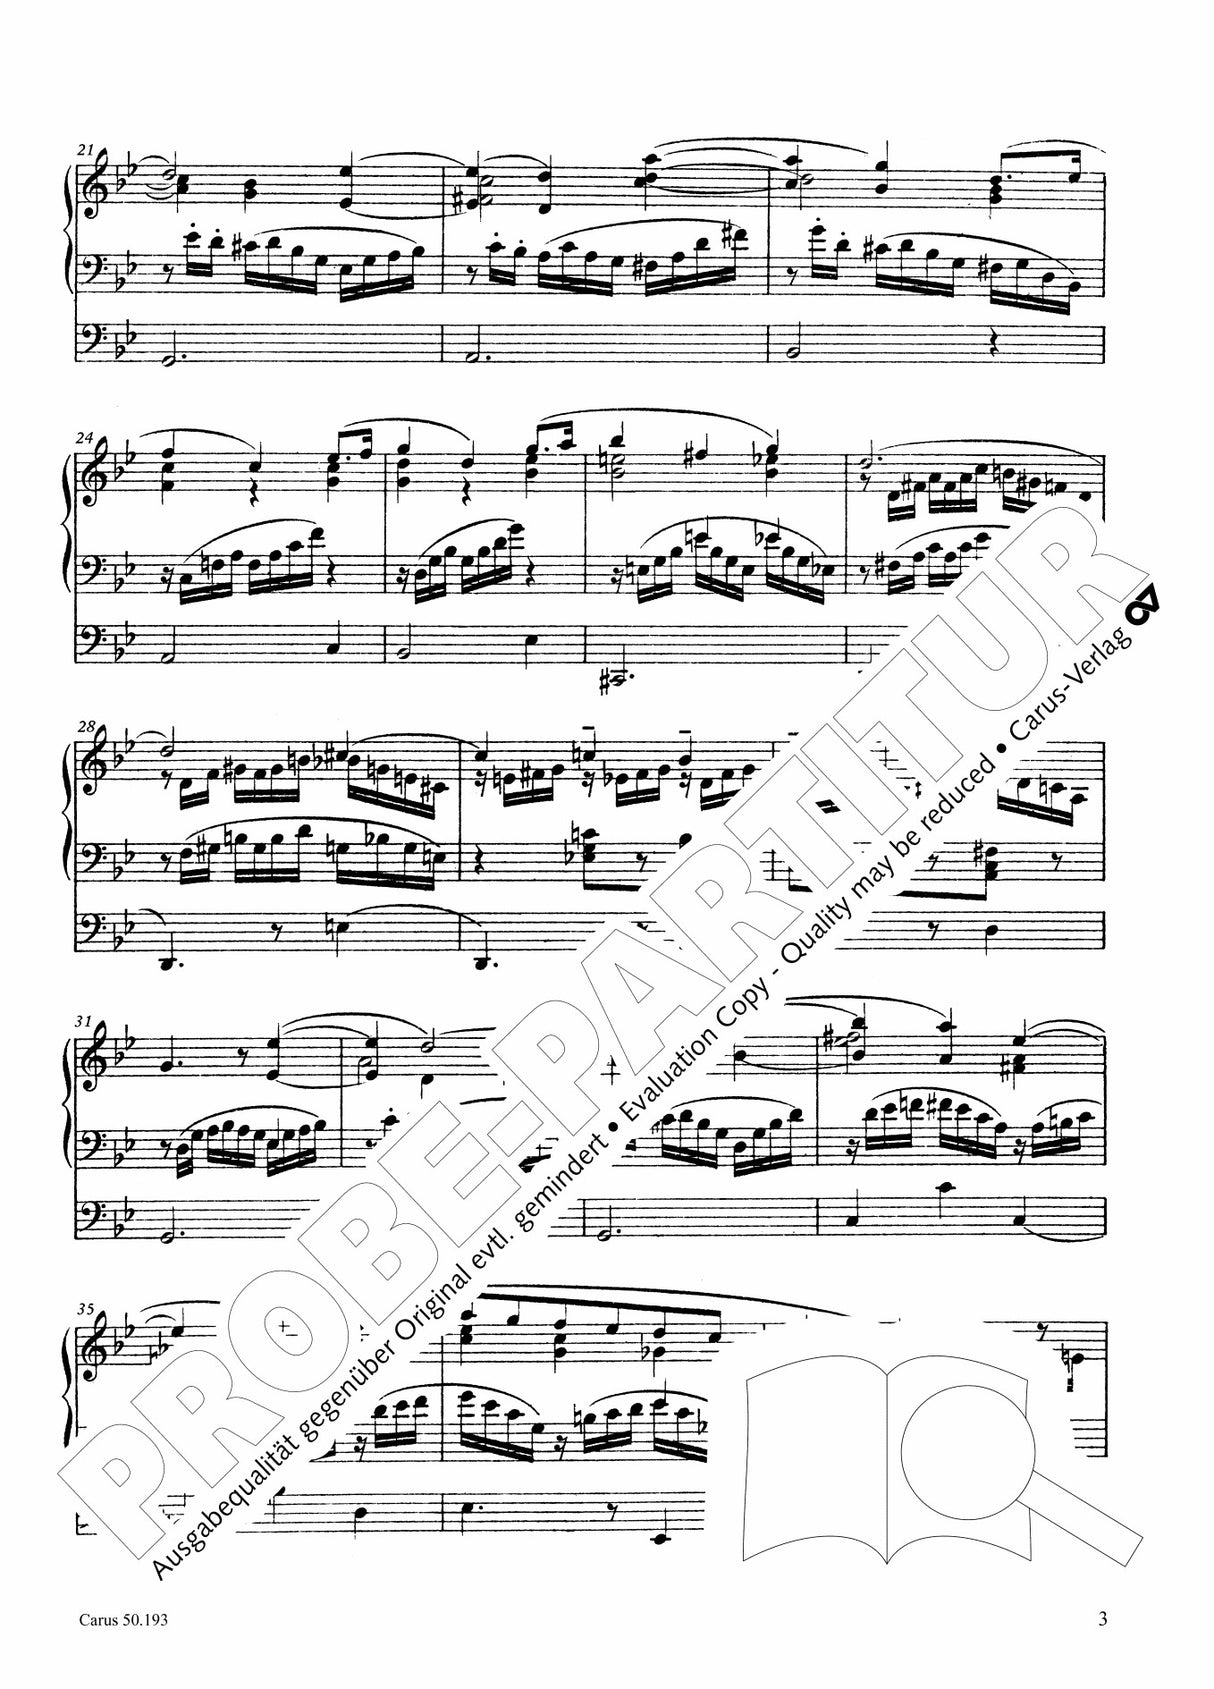 Rheinberger: Organ Sonata No. 19 in G Minor, Op. 193